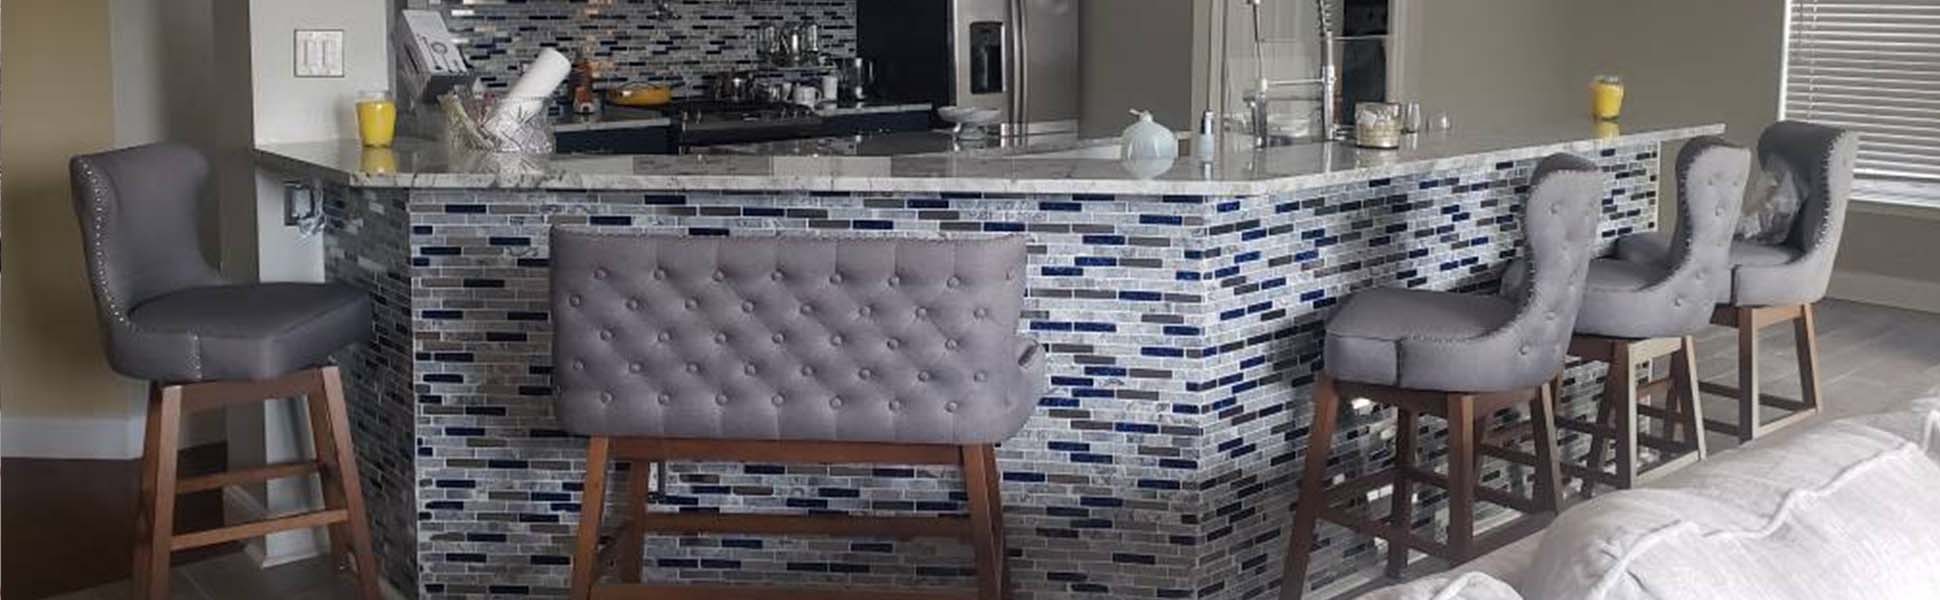 Kitchen Backsplash & Home Bar Wall Tile